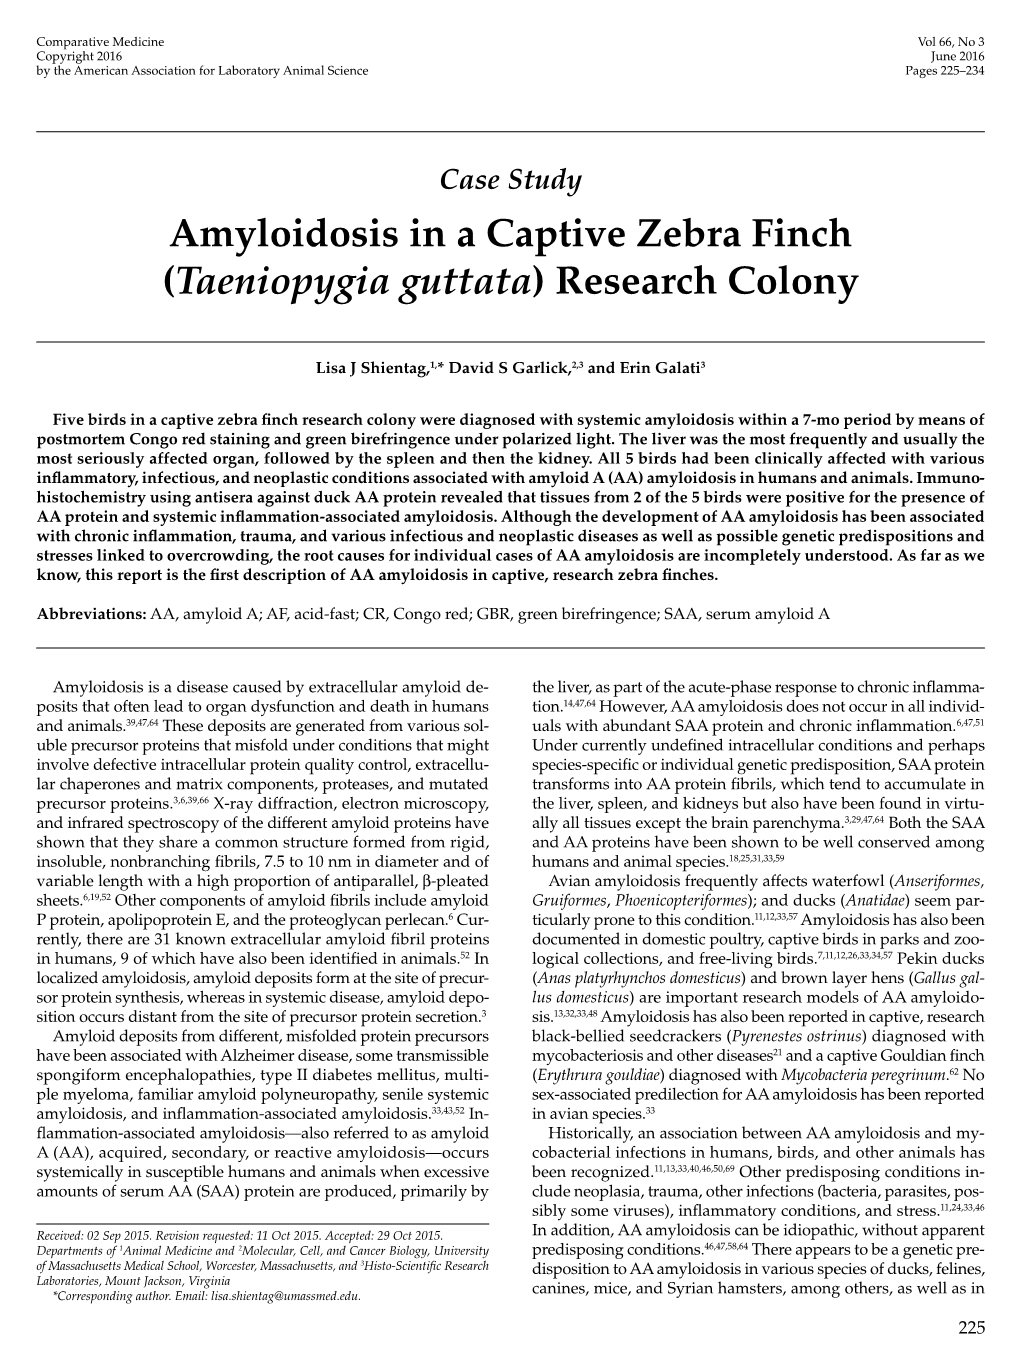 Amyloidosis in a Captive Zebra Finch (Taeniopygia Guttata) Research Colony